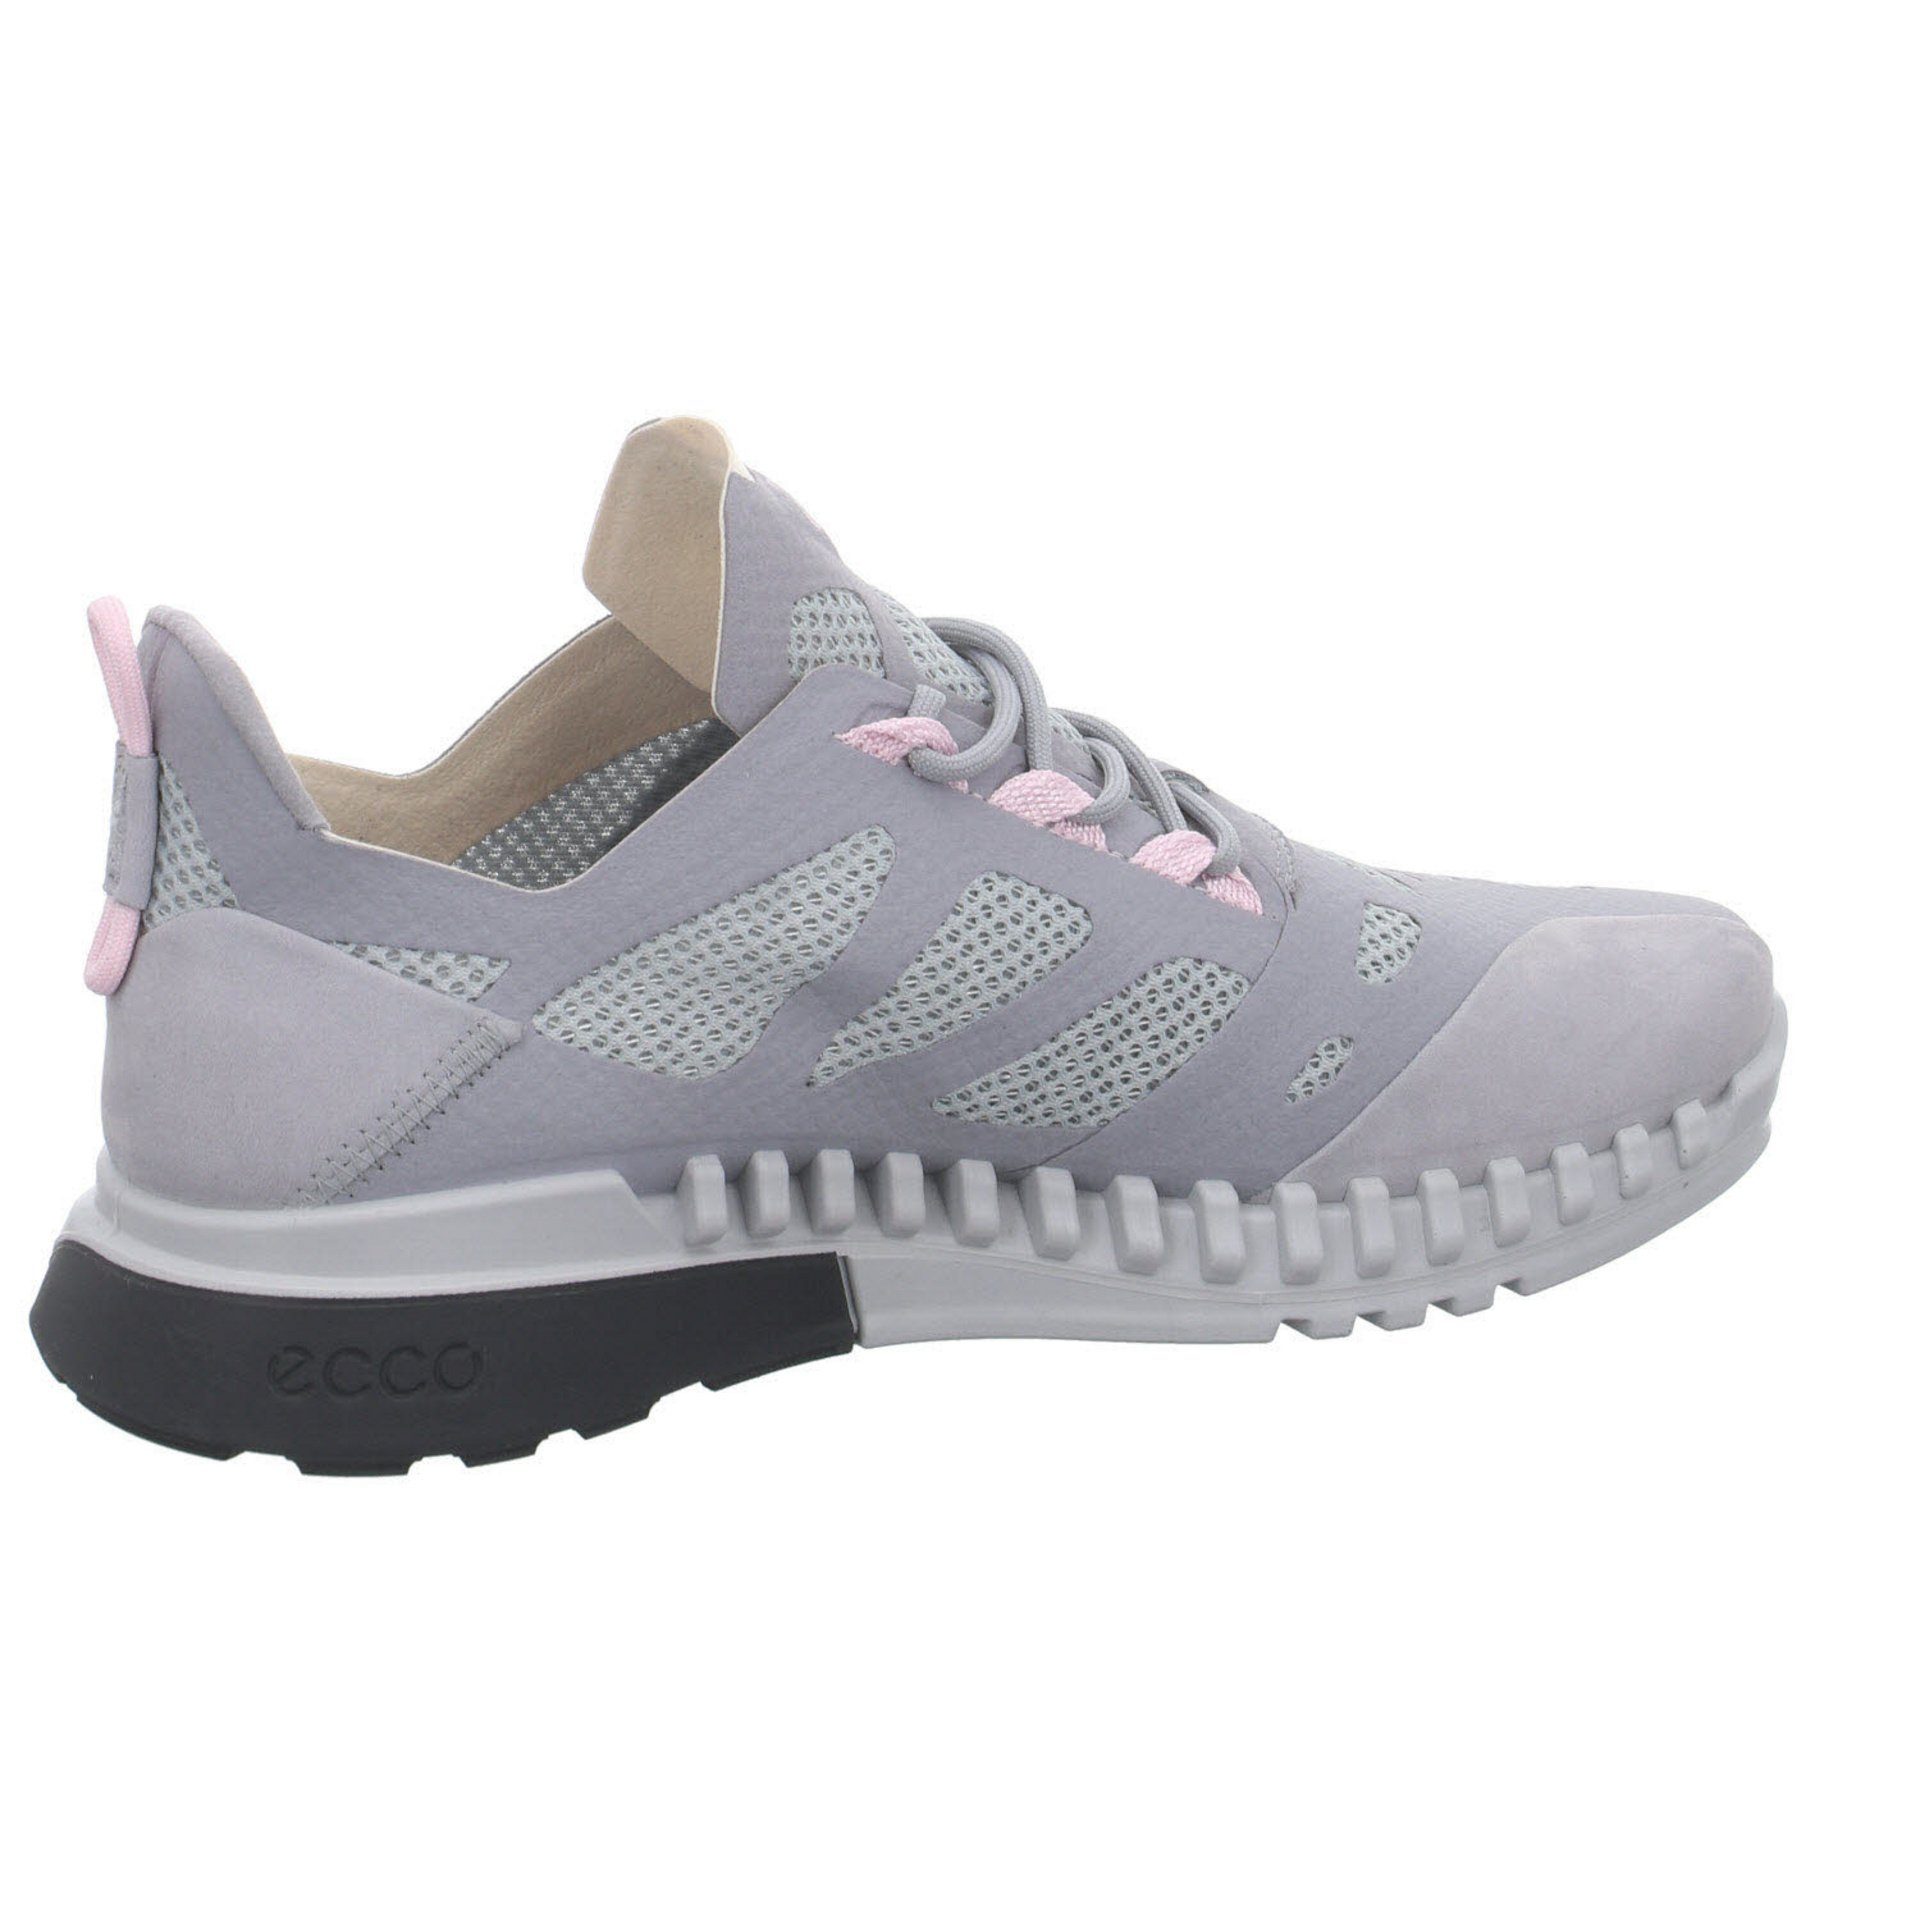 Ecco Damen Sneaker Leder-/Textilkombination Schuhe Zipflex silvergrey/silvergre Sneaker Schnürschuh